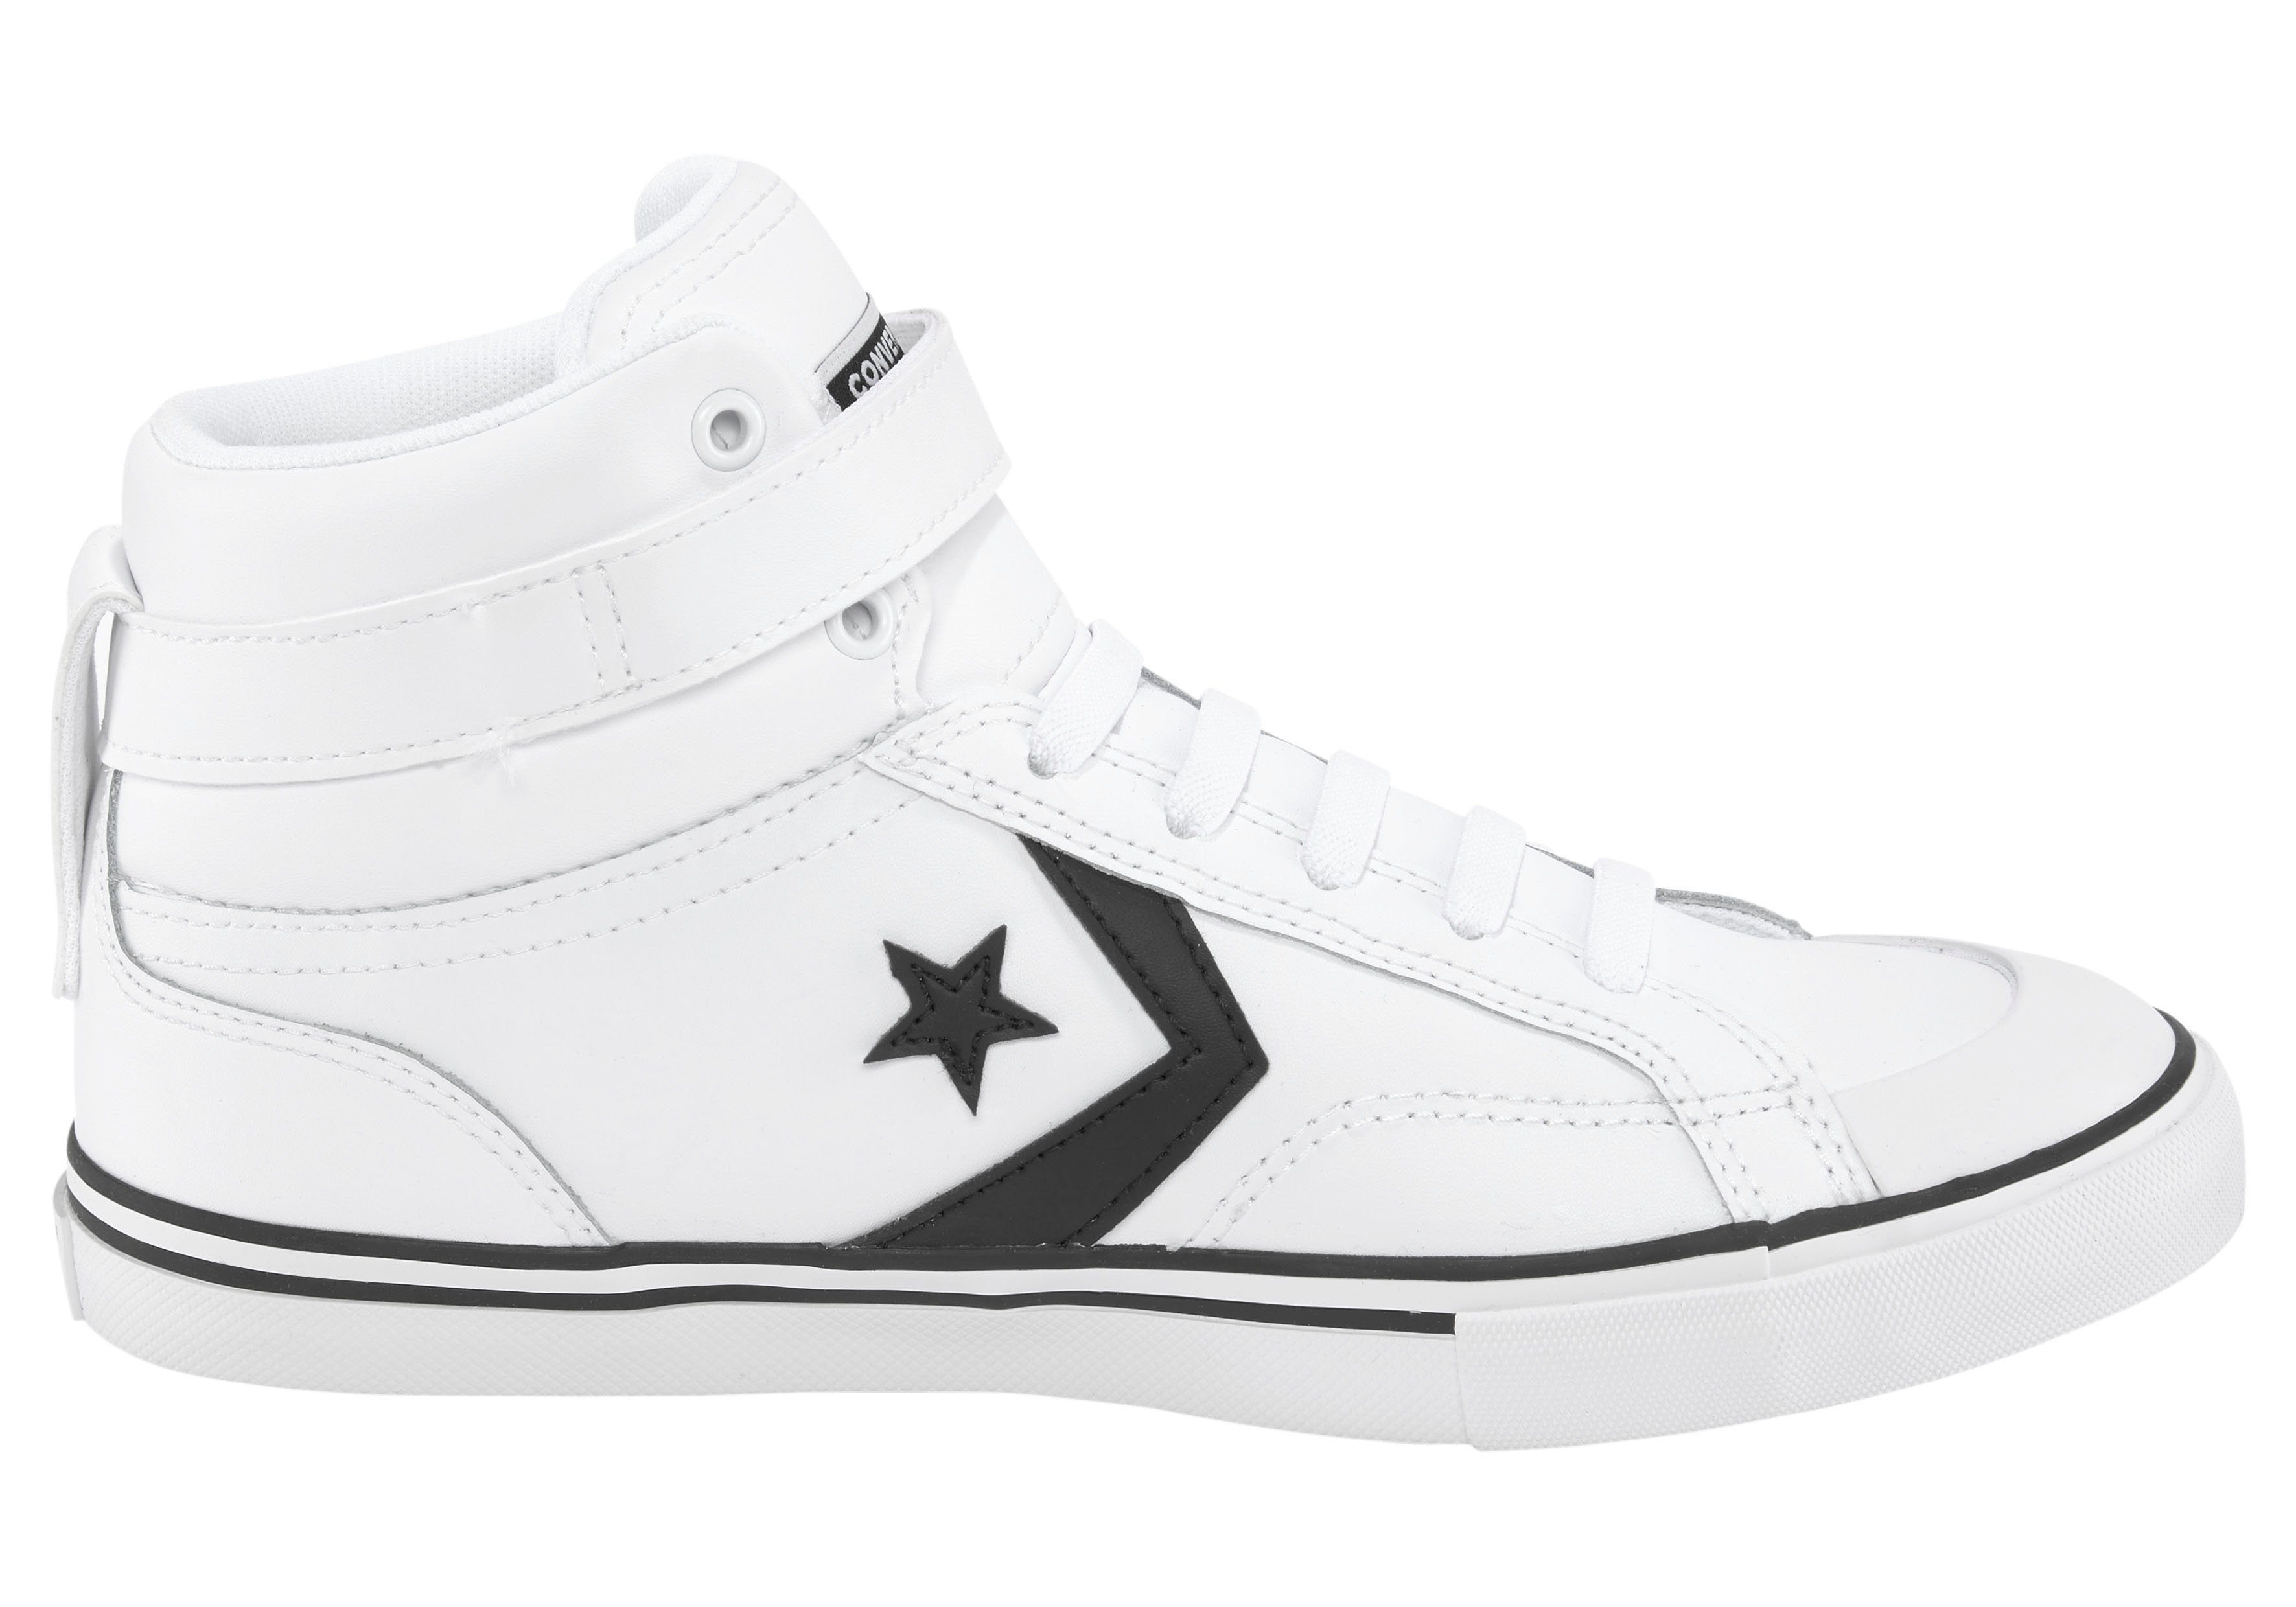 Converse LEATHER weiß-schwarz BLAZE PRO STRAP Sneaker